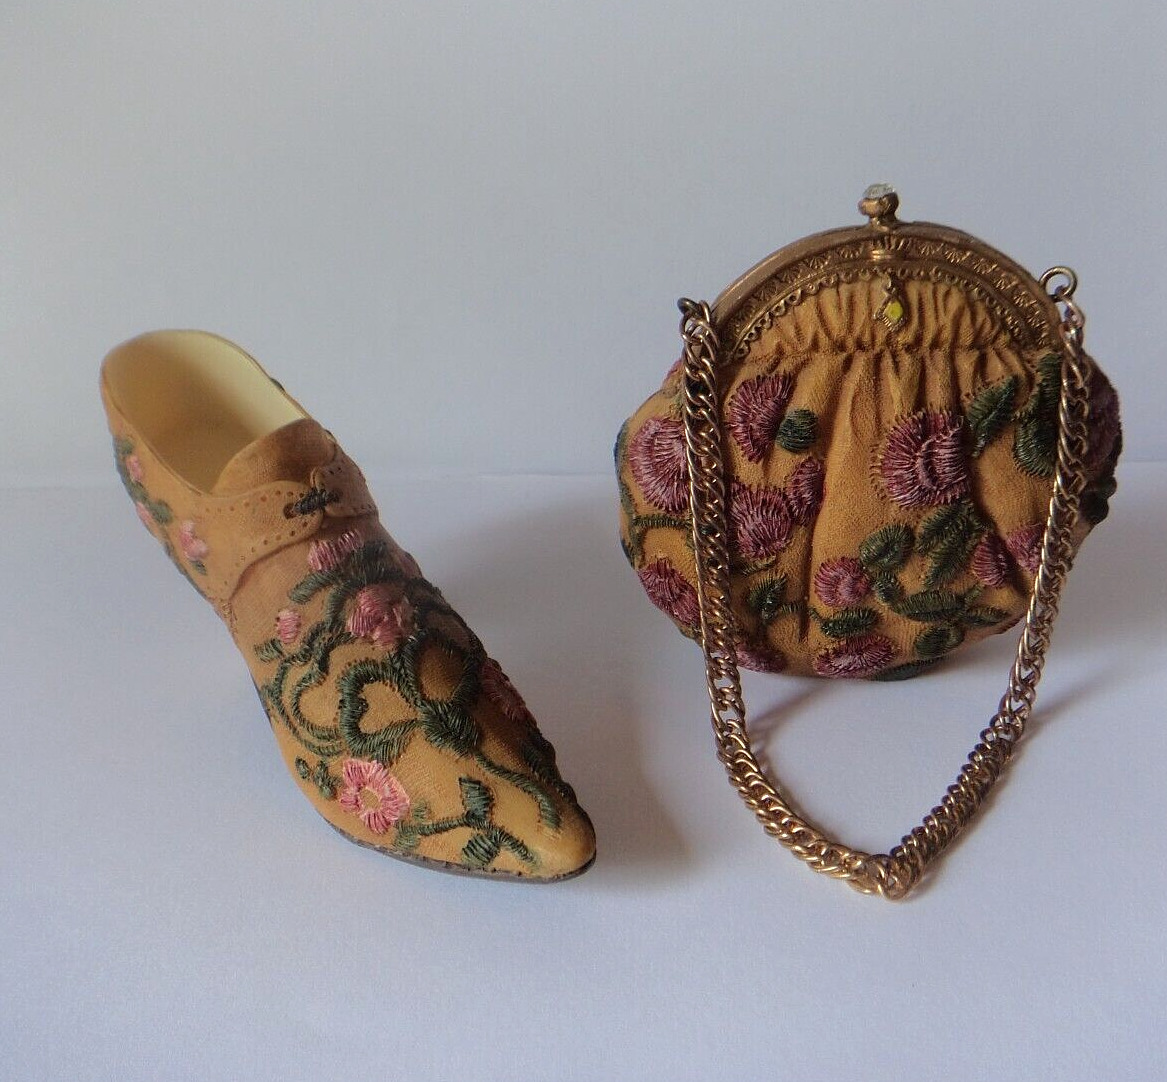 Vintage Miniature Hi Heel Shoe and Handbag Figurine Collectibles